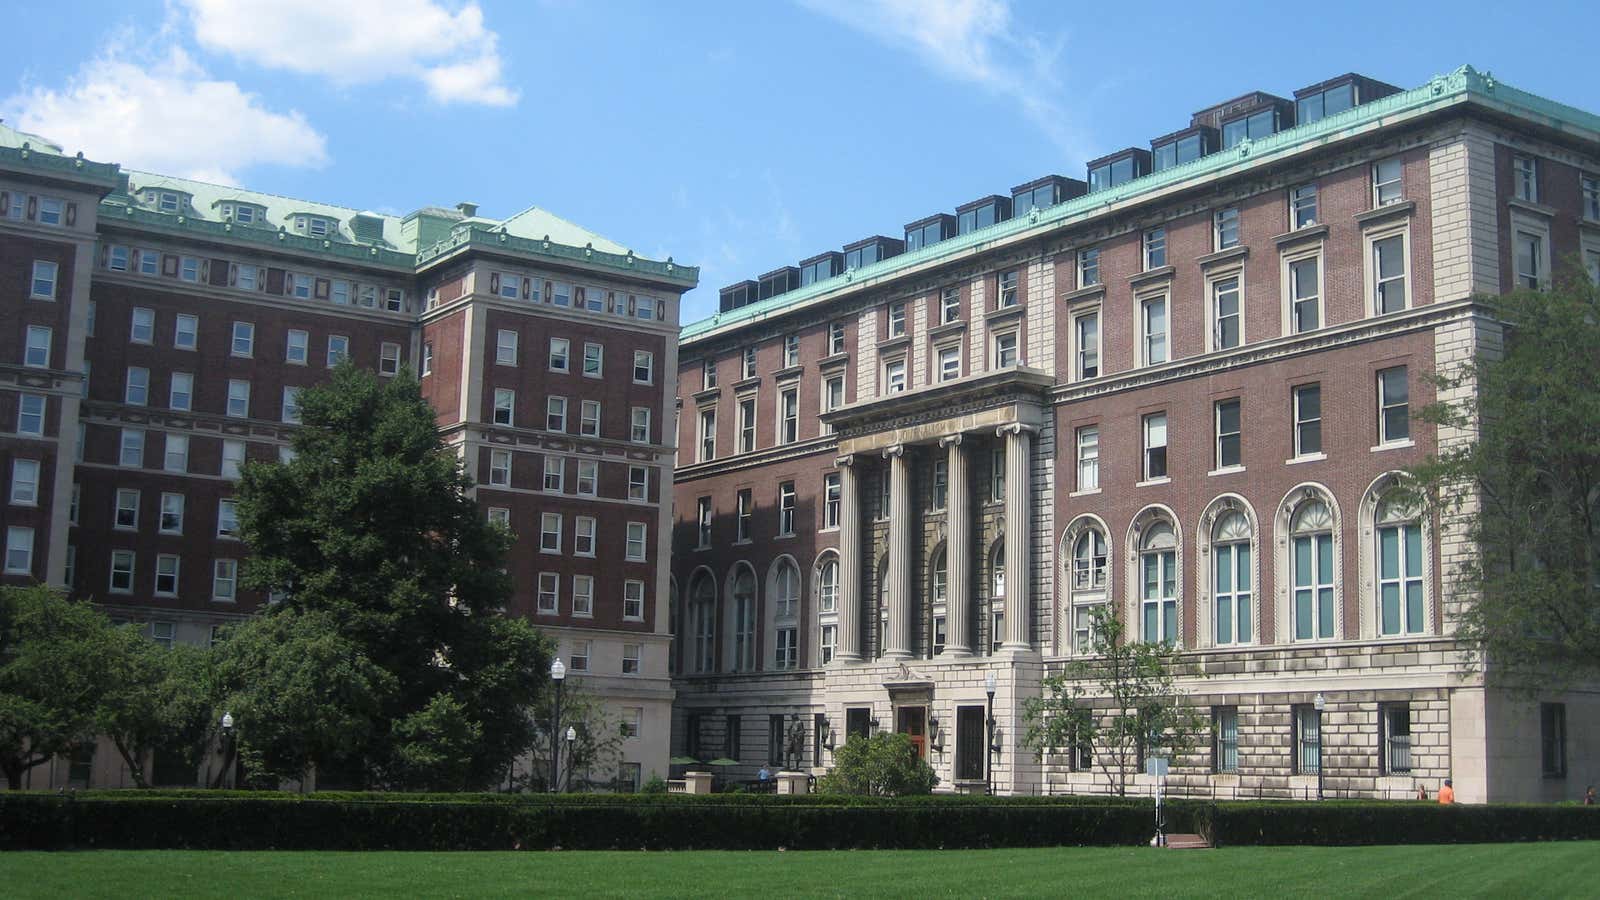 Columbia Graduate School of Journalism, at right